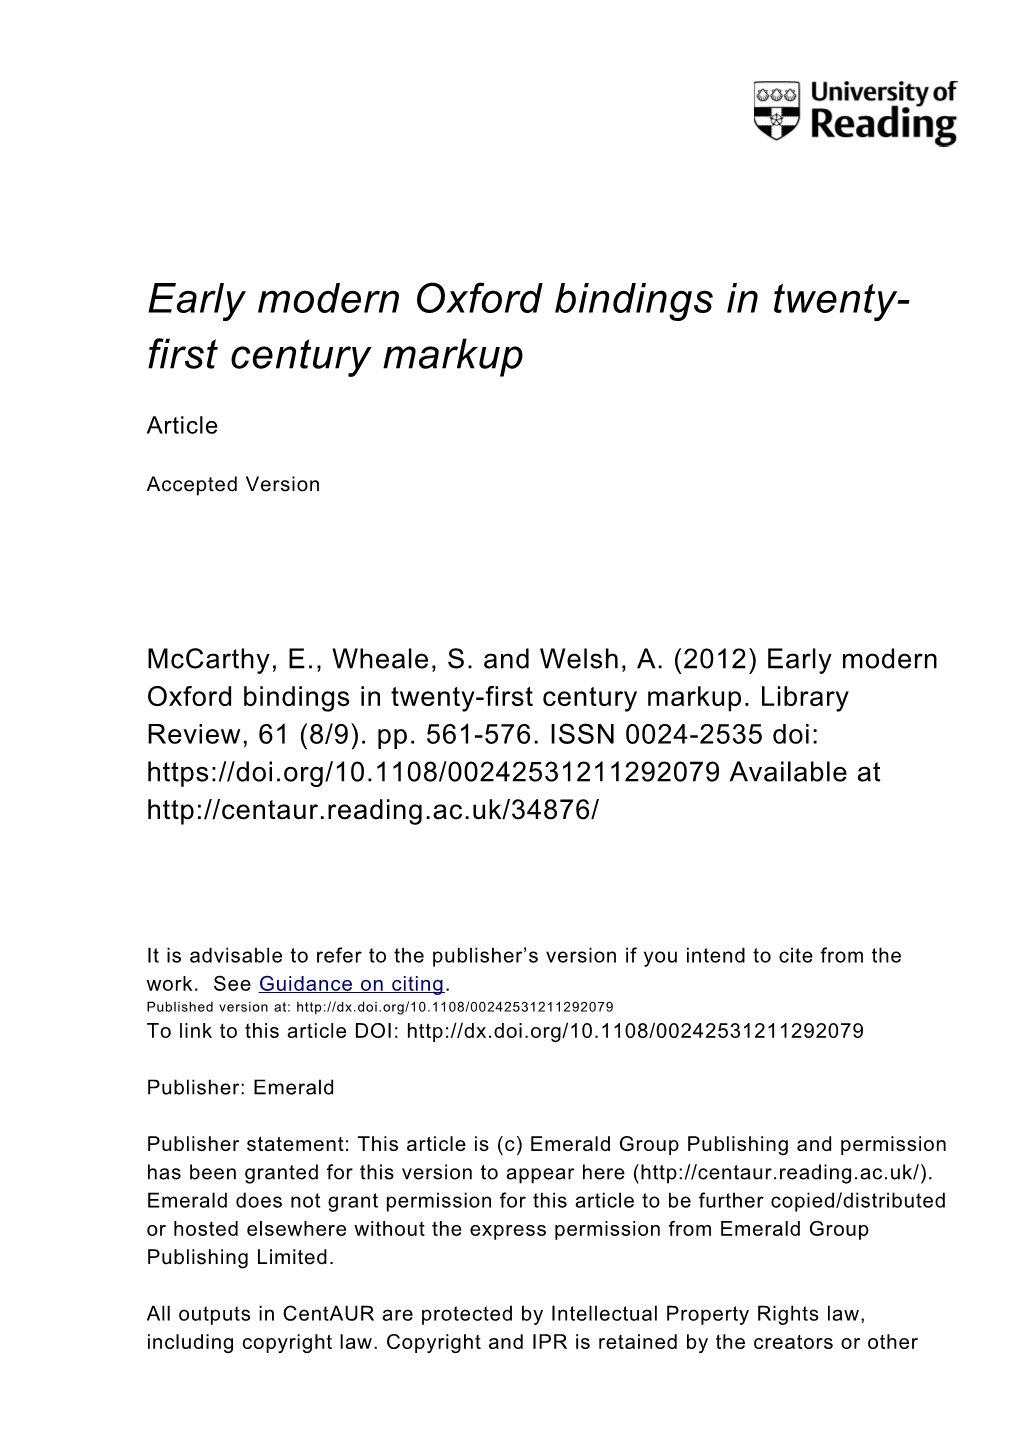 Early Modern Oxford Bindings in Twenty- First Century Markup